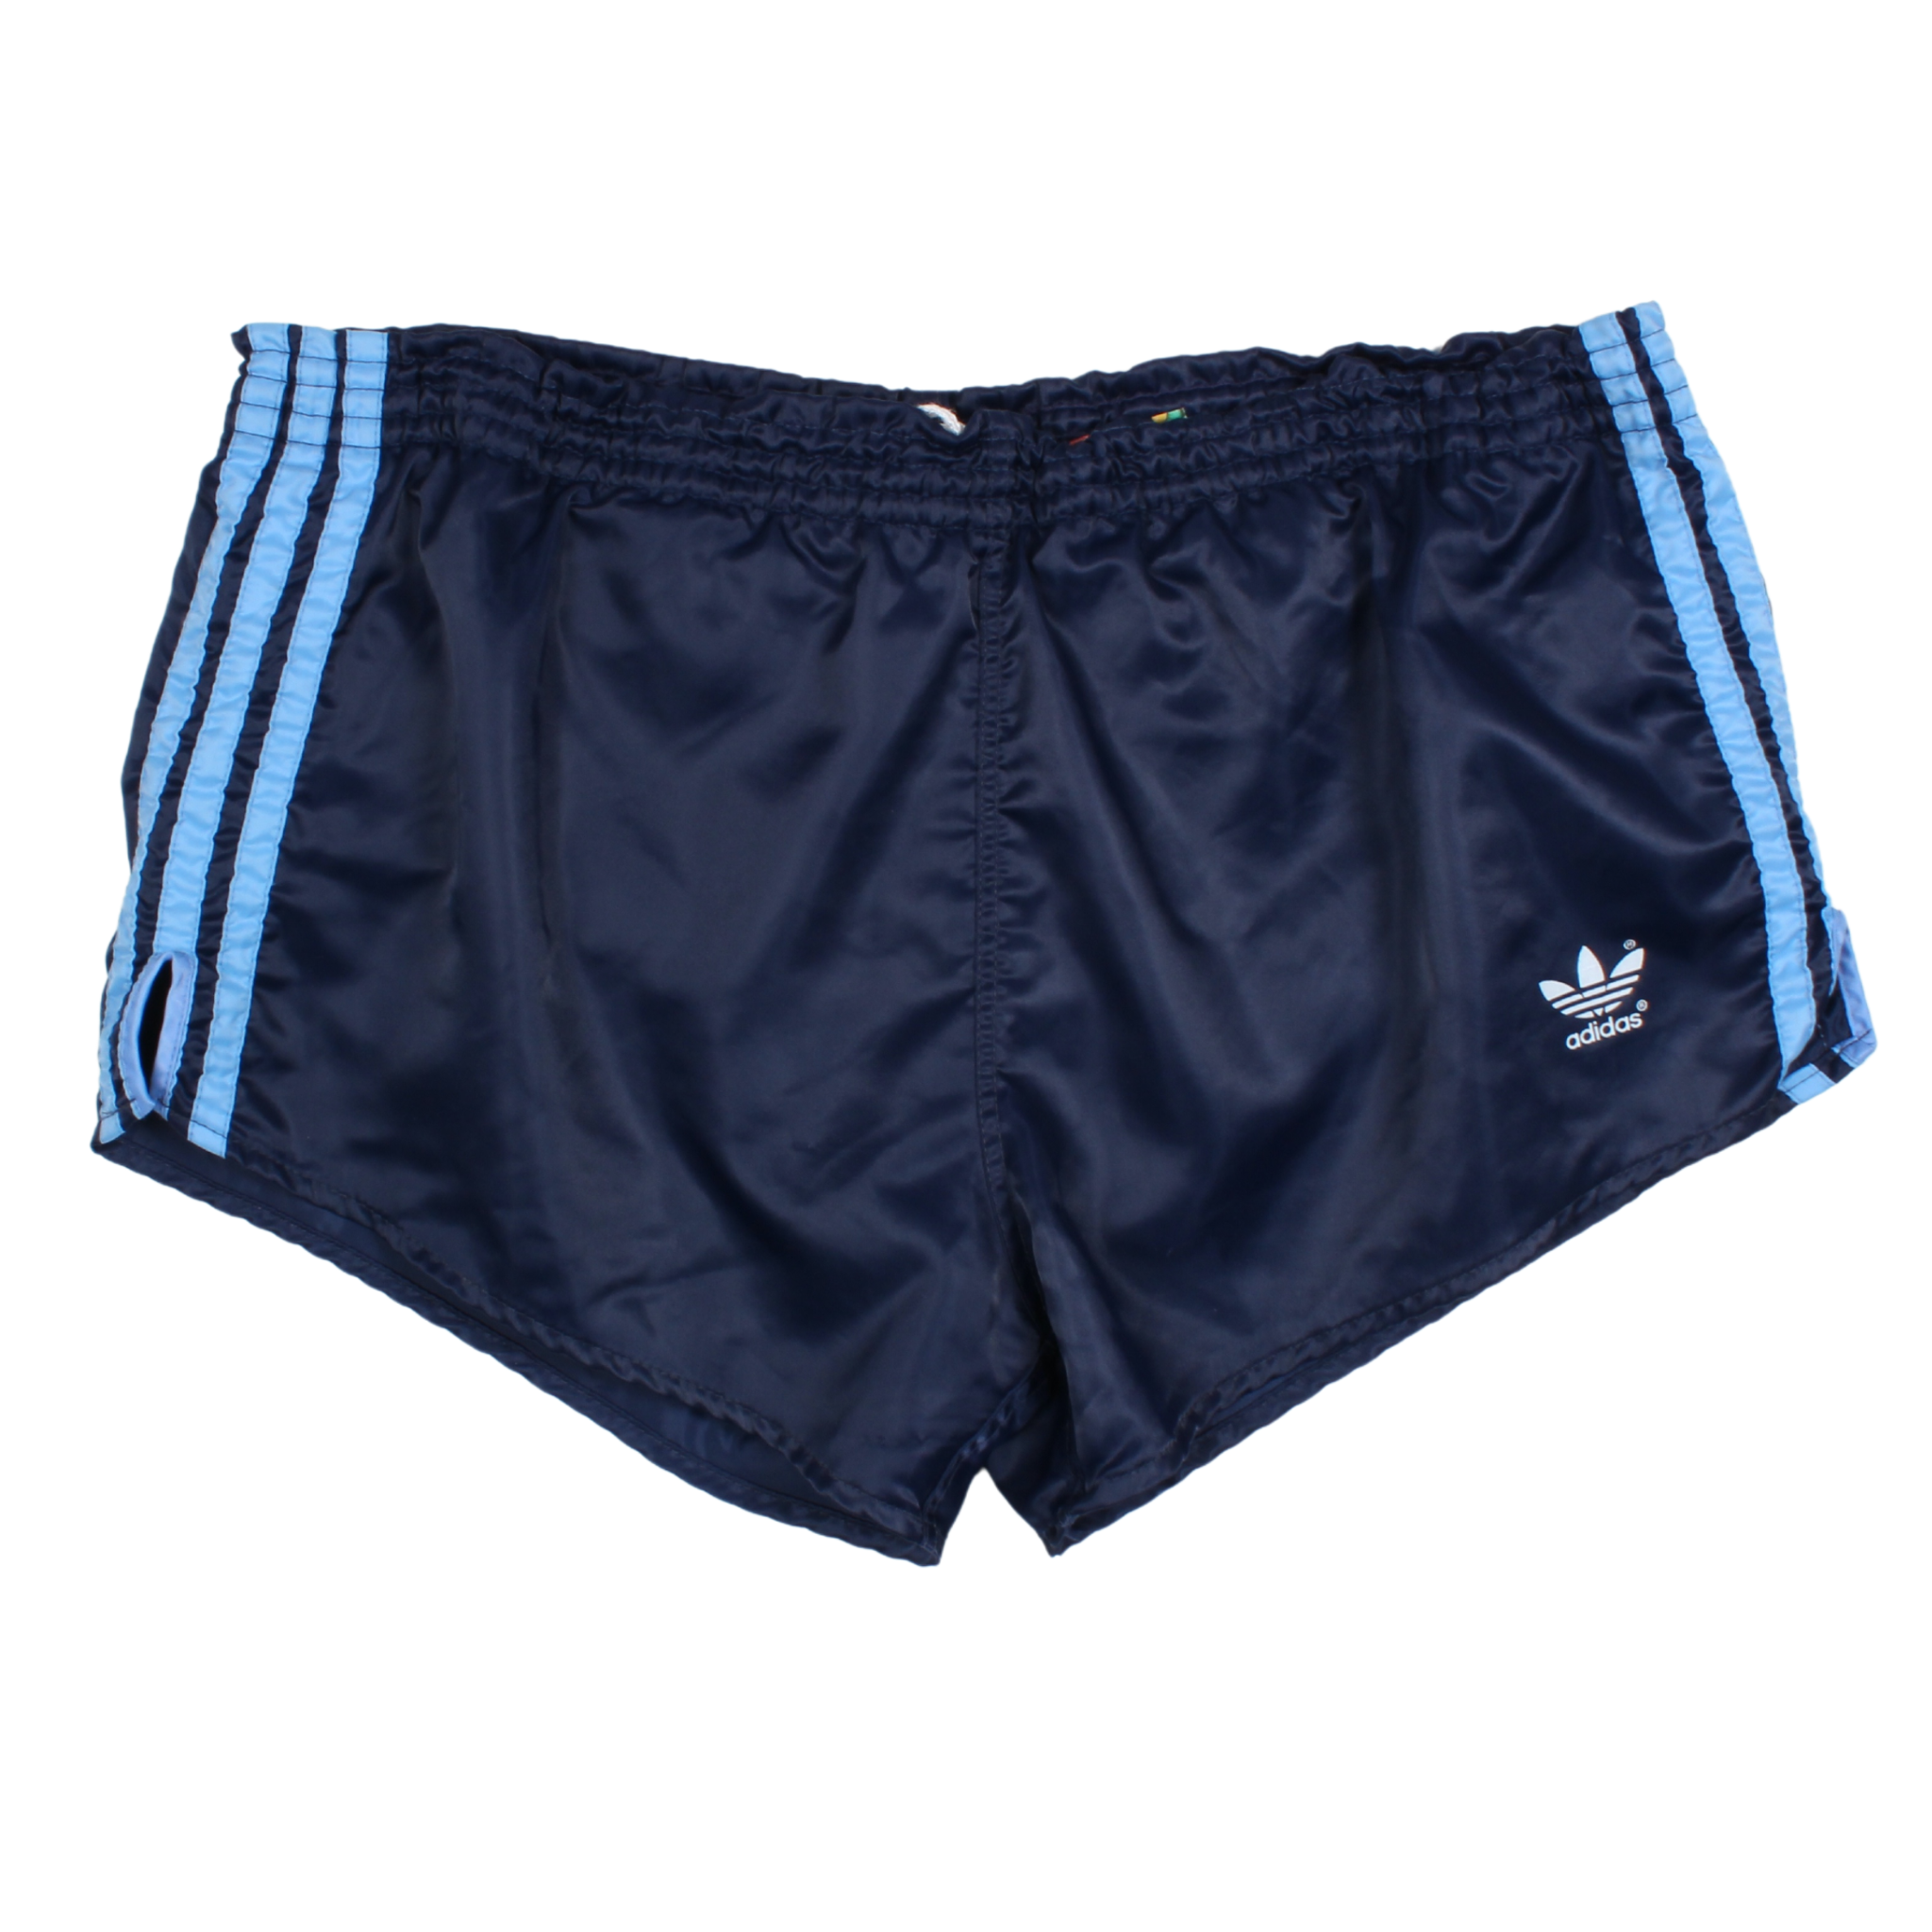 Vintage Adidas Sprinter Shorts (M)